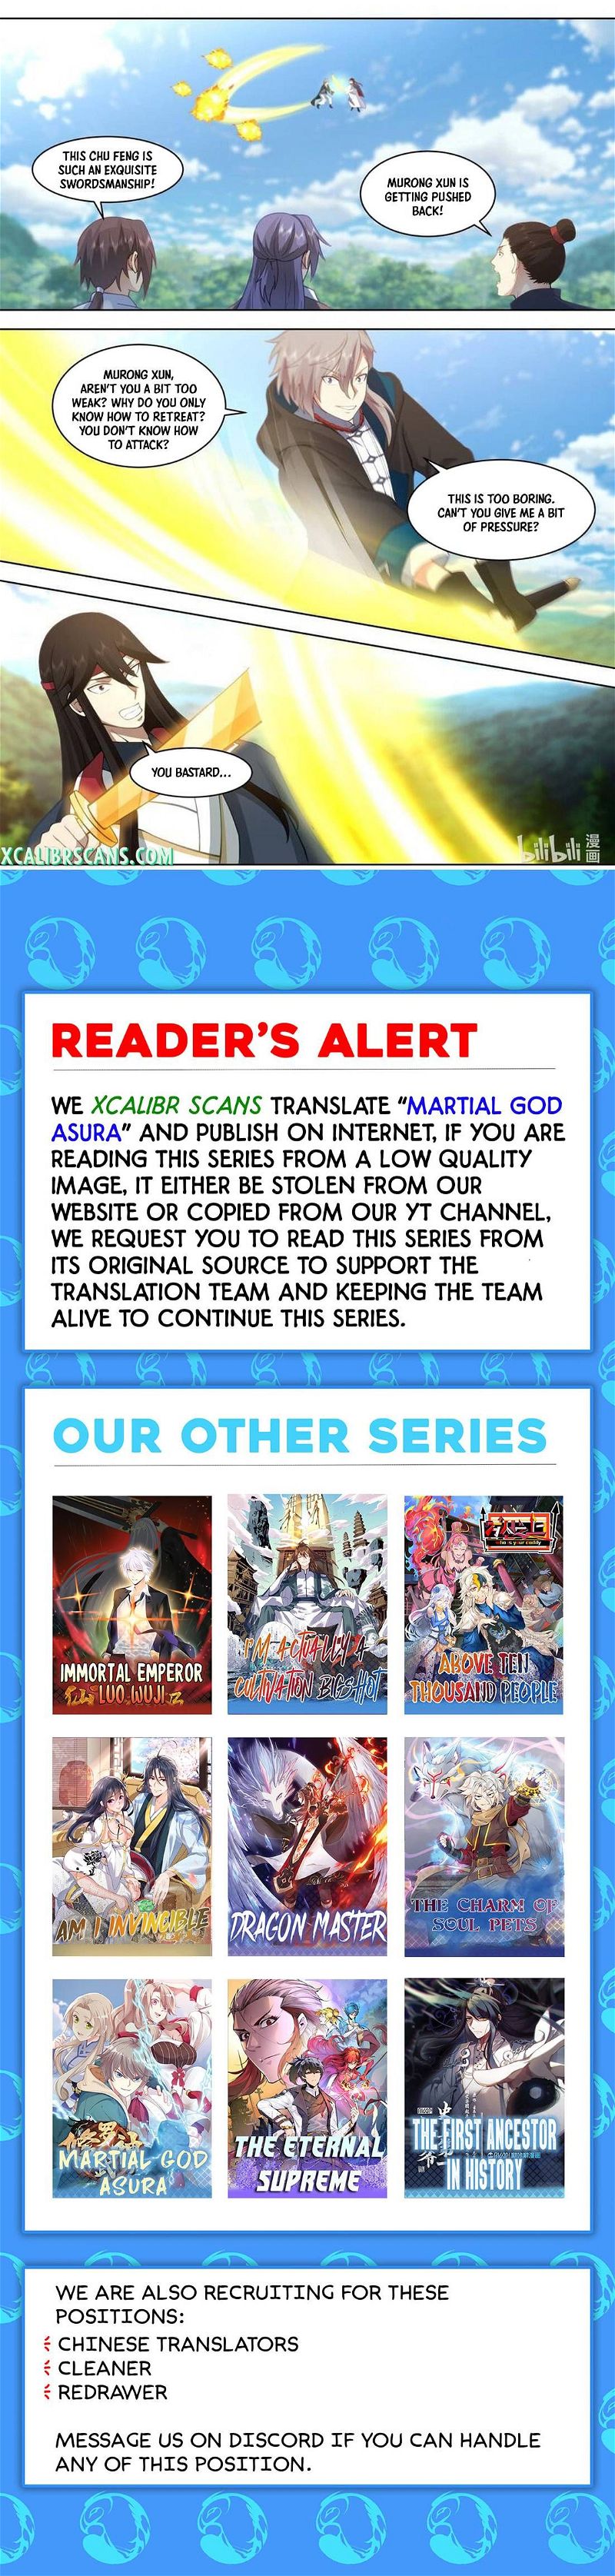 Martial God Asura Chapter 568 page 10